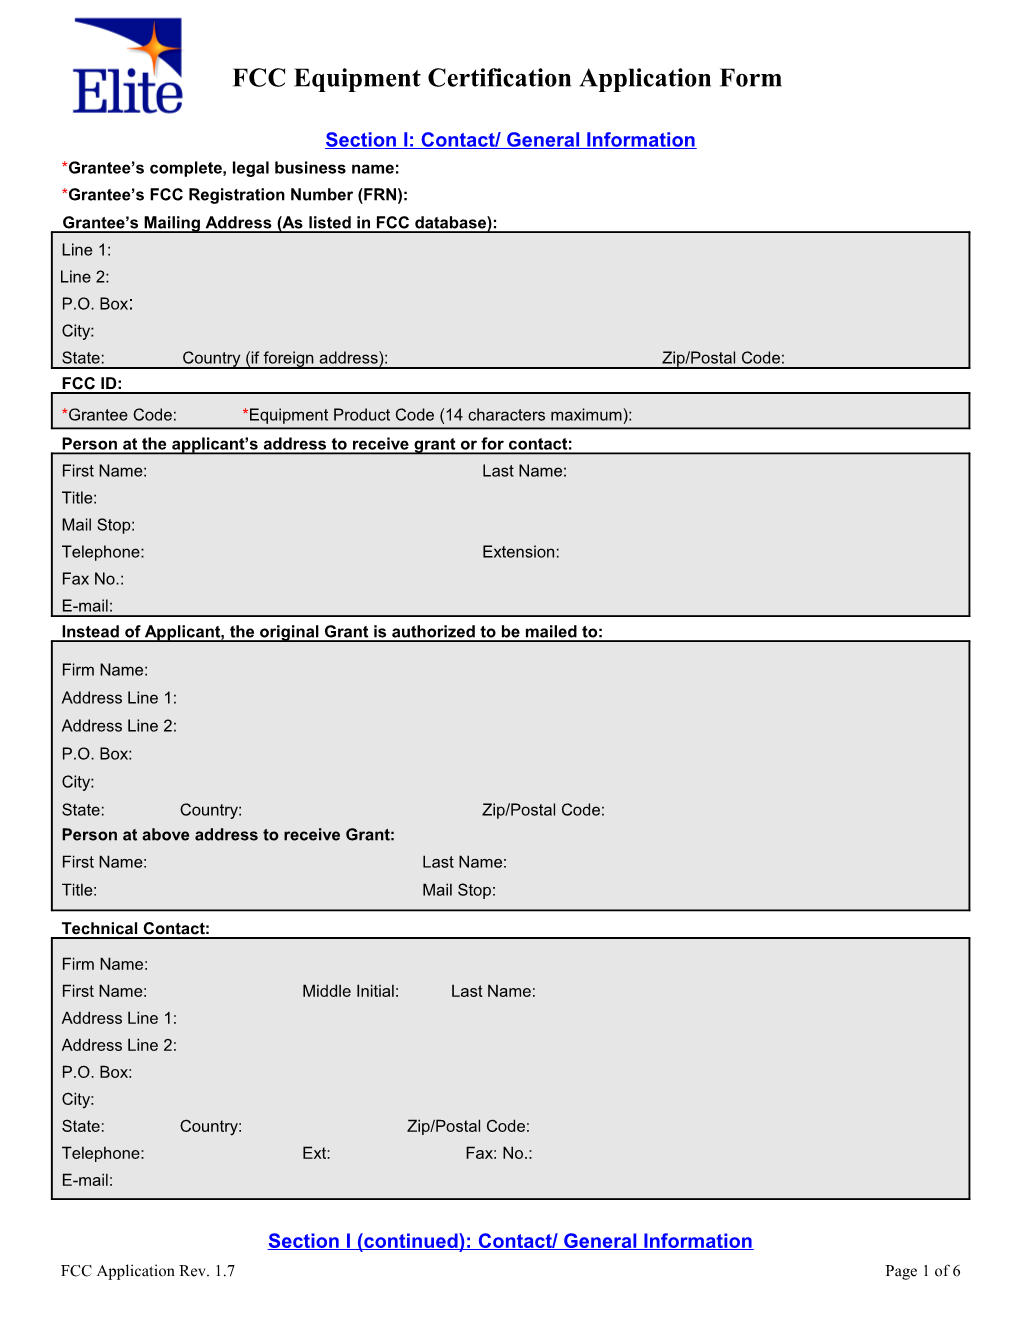 FCC Equipment Certification Application Form